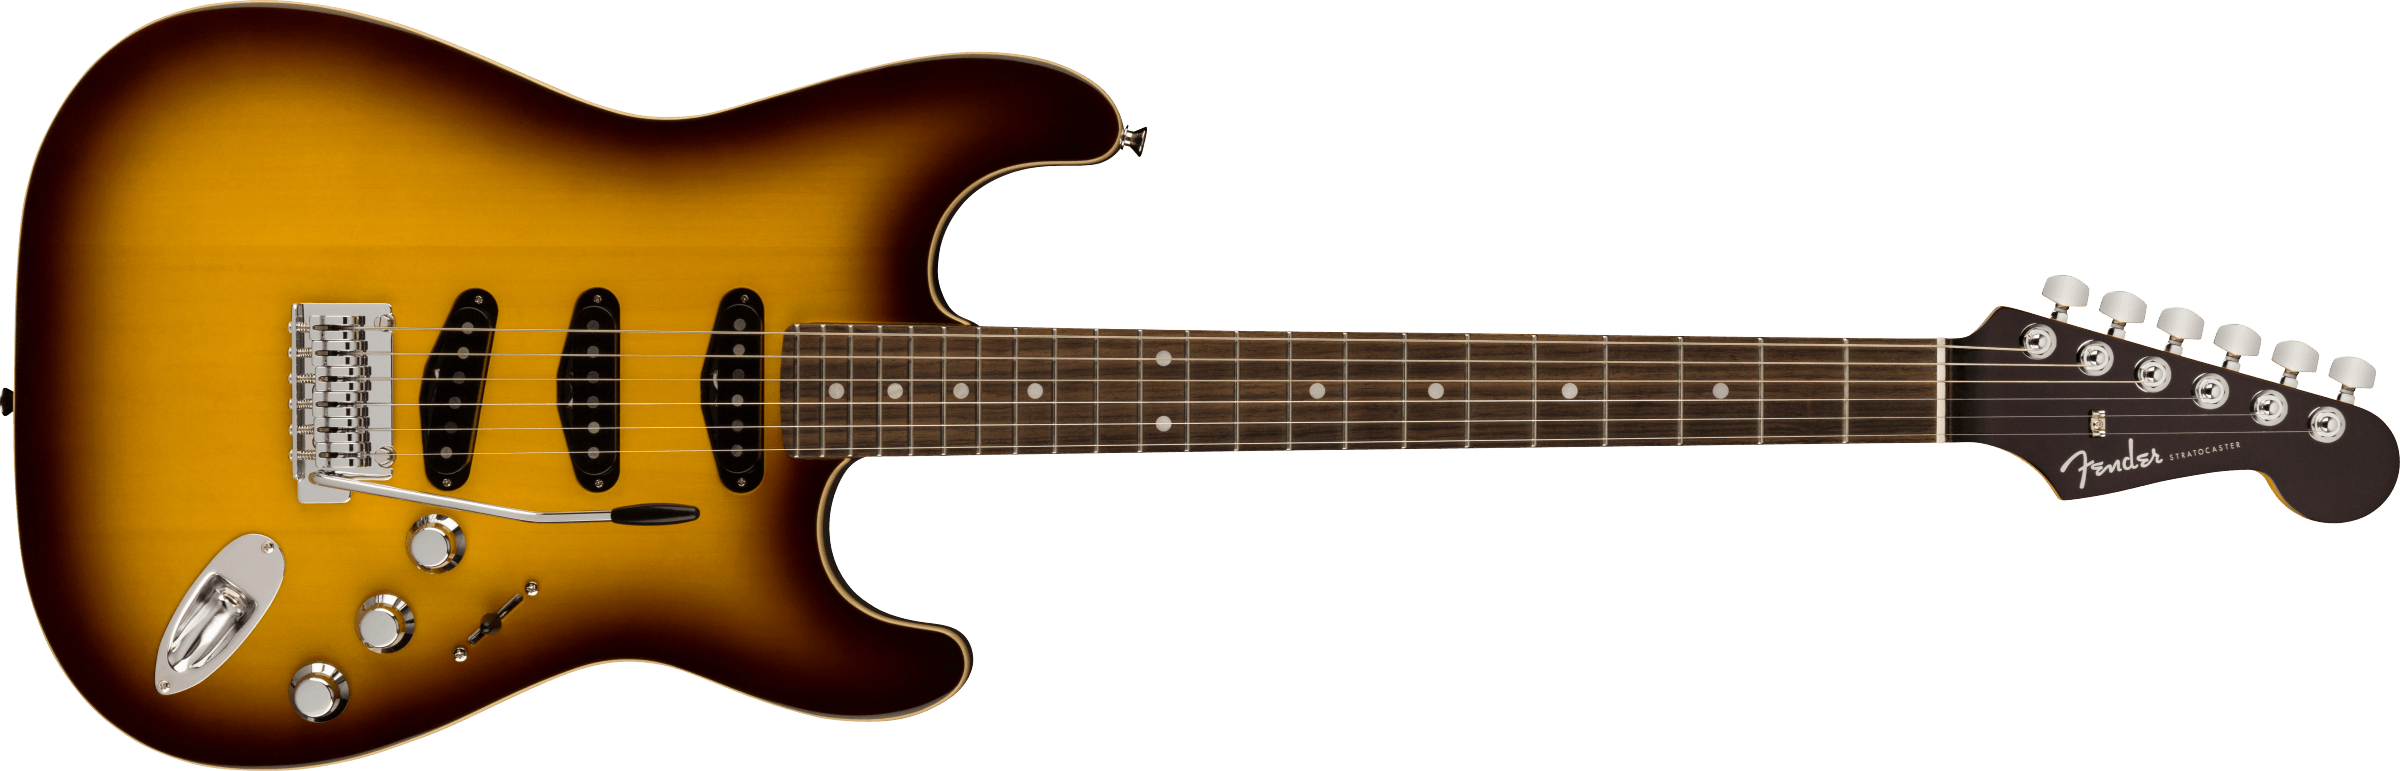 Fender® Aerodyne Special Stratocaster®, Rosewood Fingerboard, Chocolate Burst